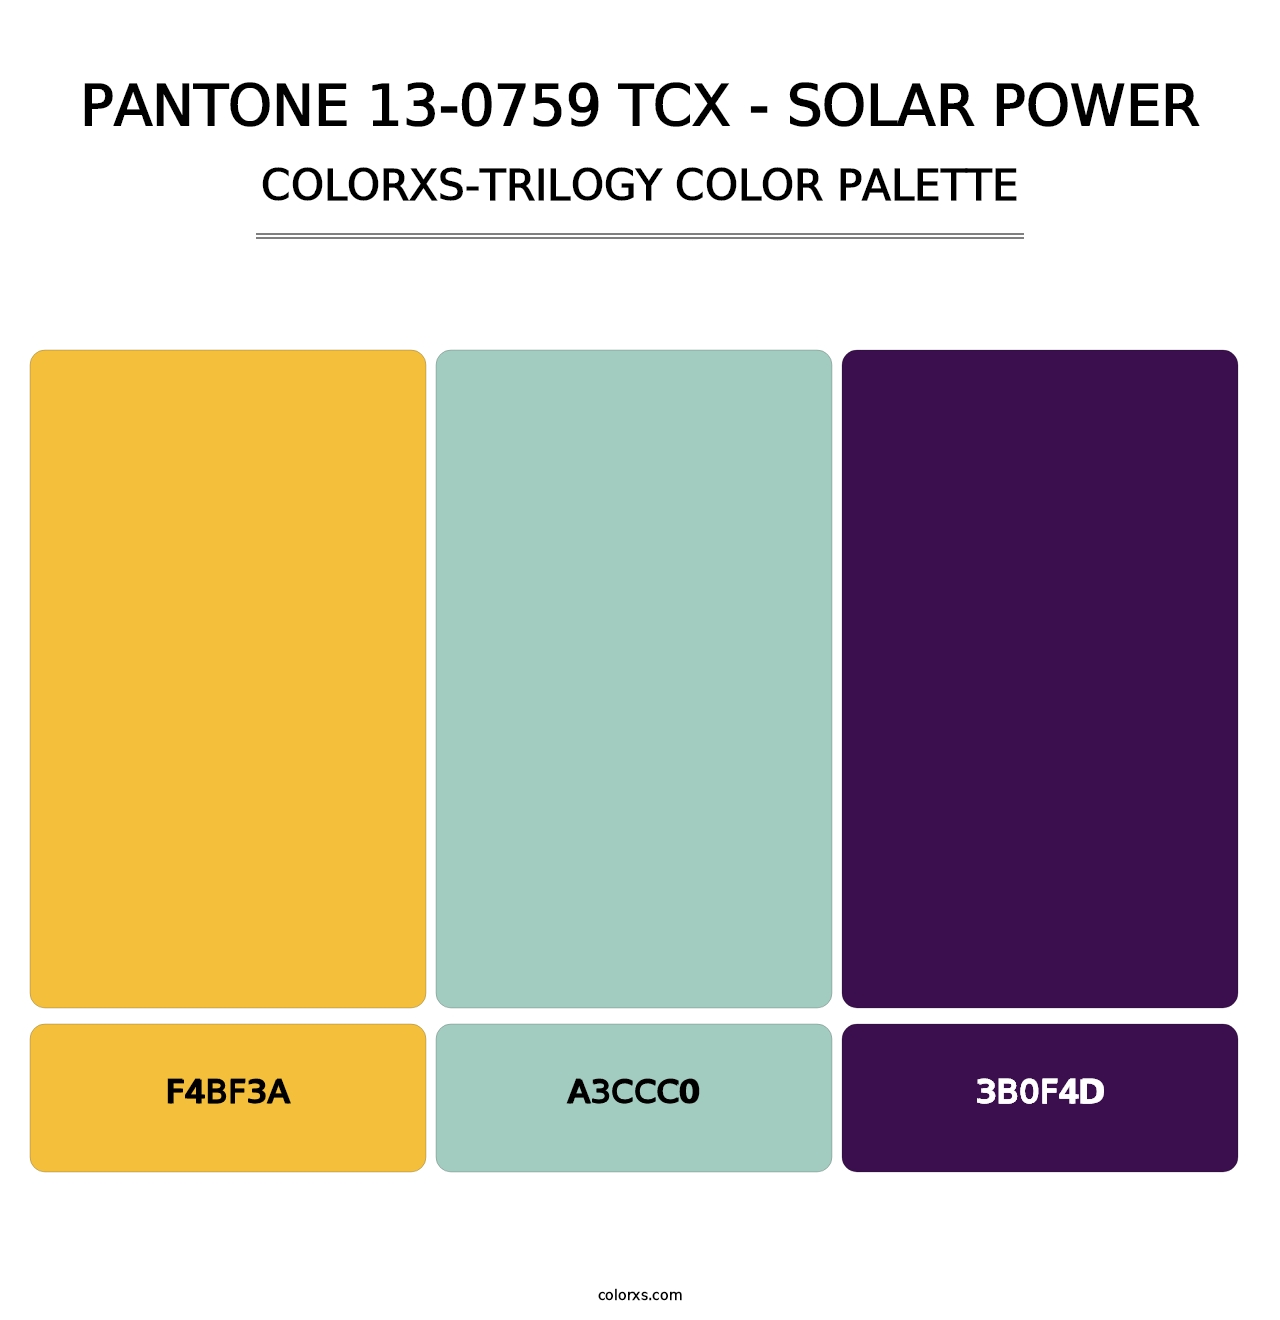 PANTONE 13-0759 TCX - Solar Power - Colorxs Trilogy Palette